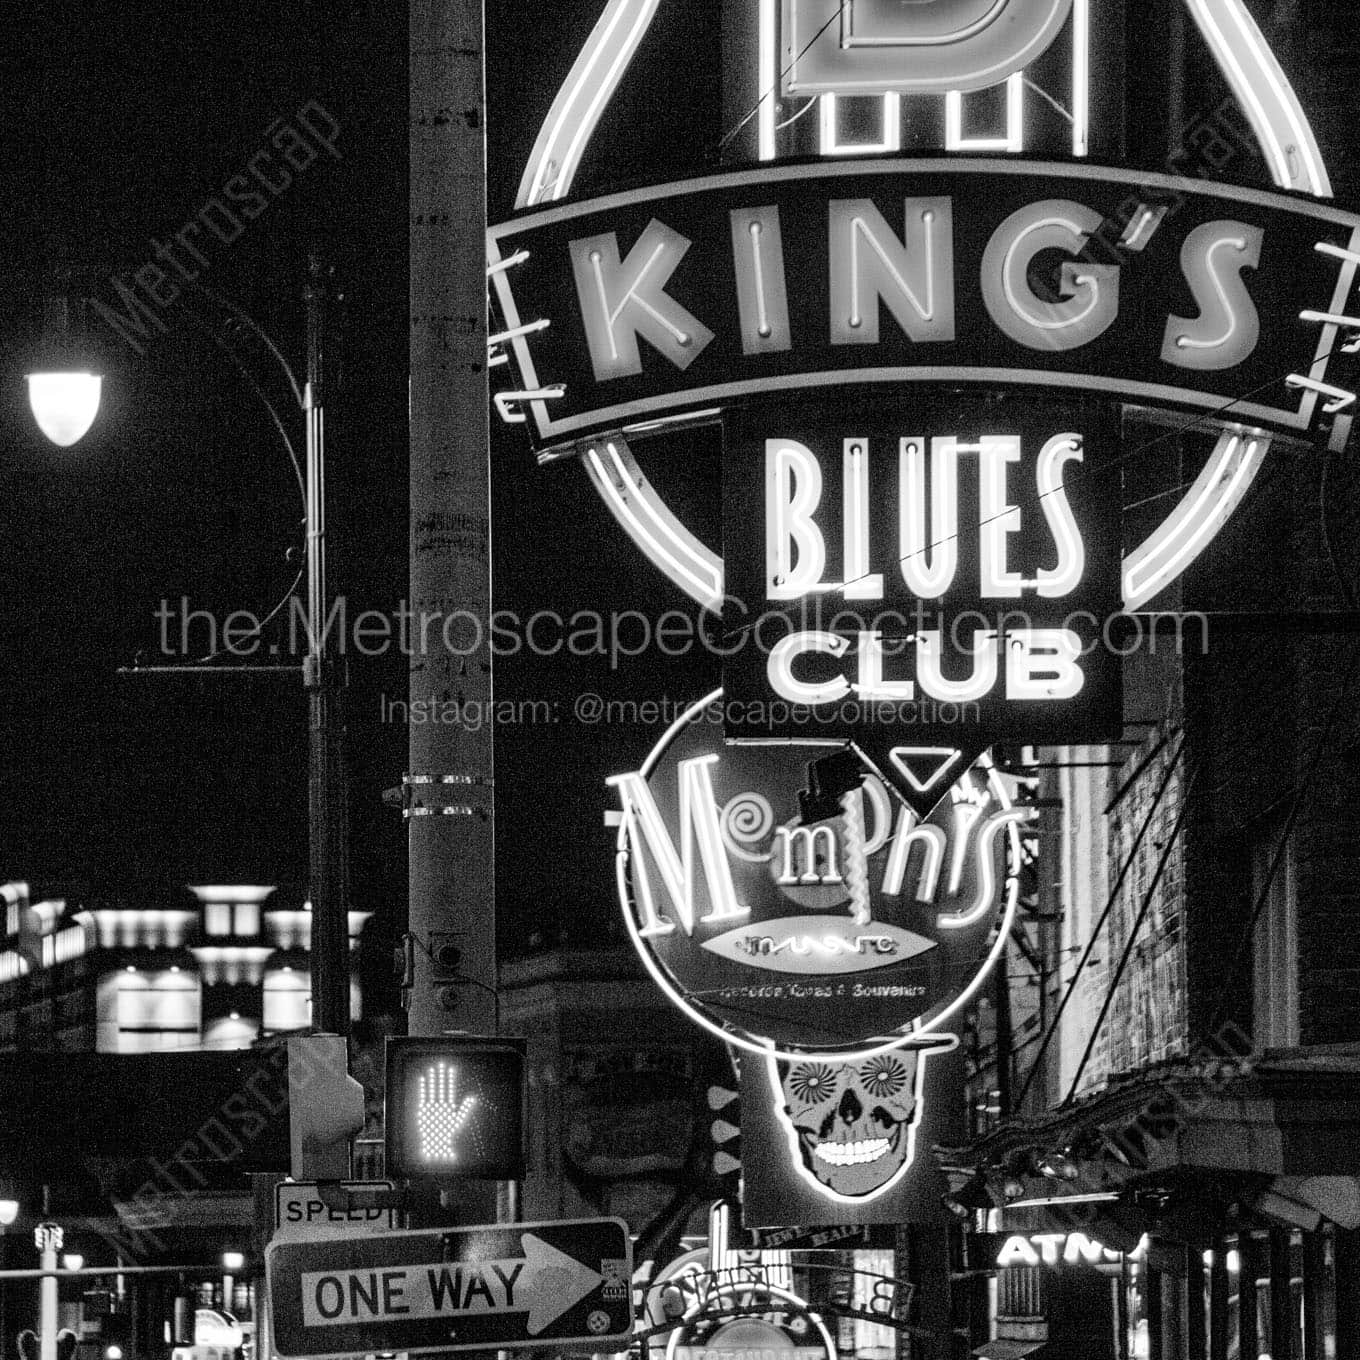 bb kings blues club beale street Black & White Office Art